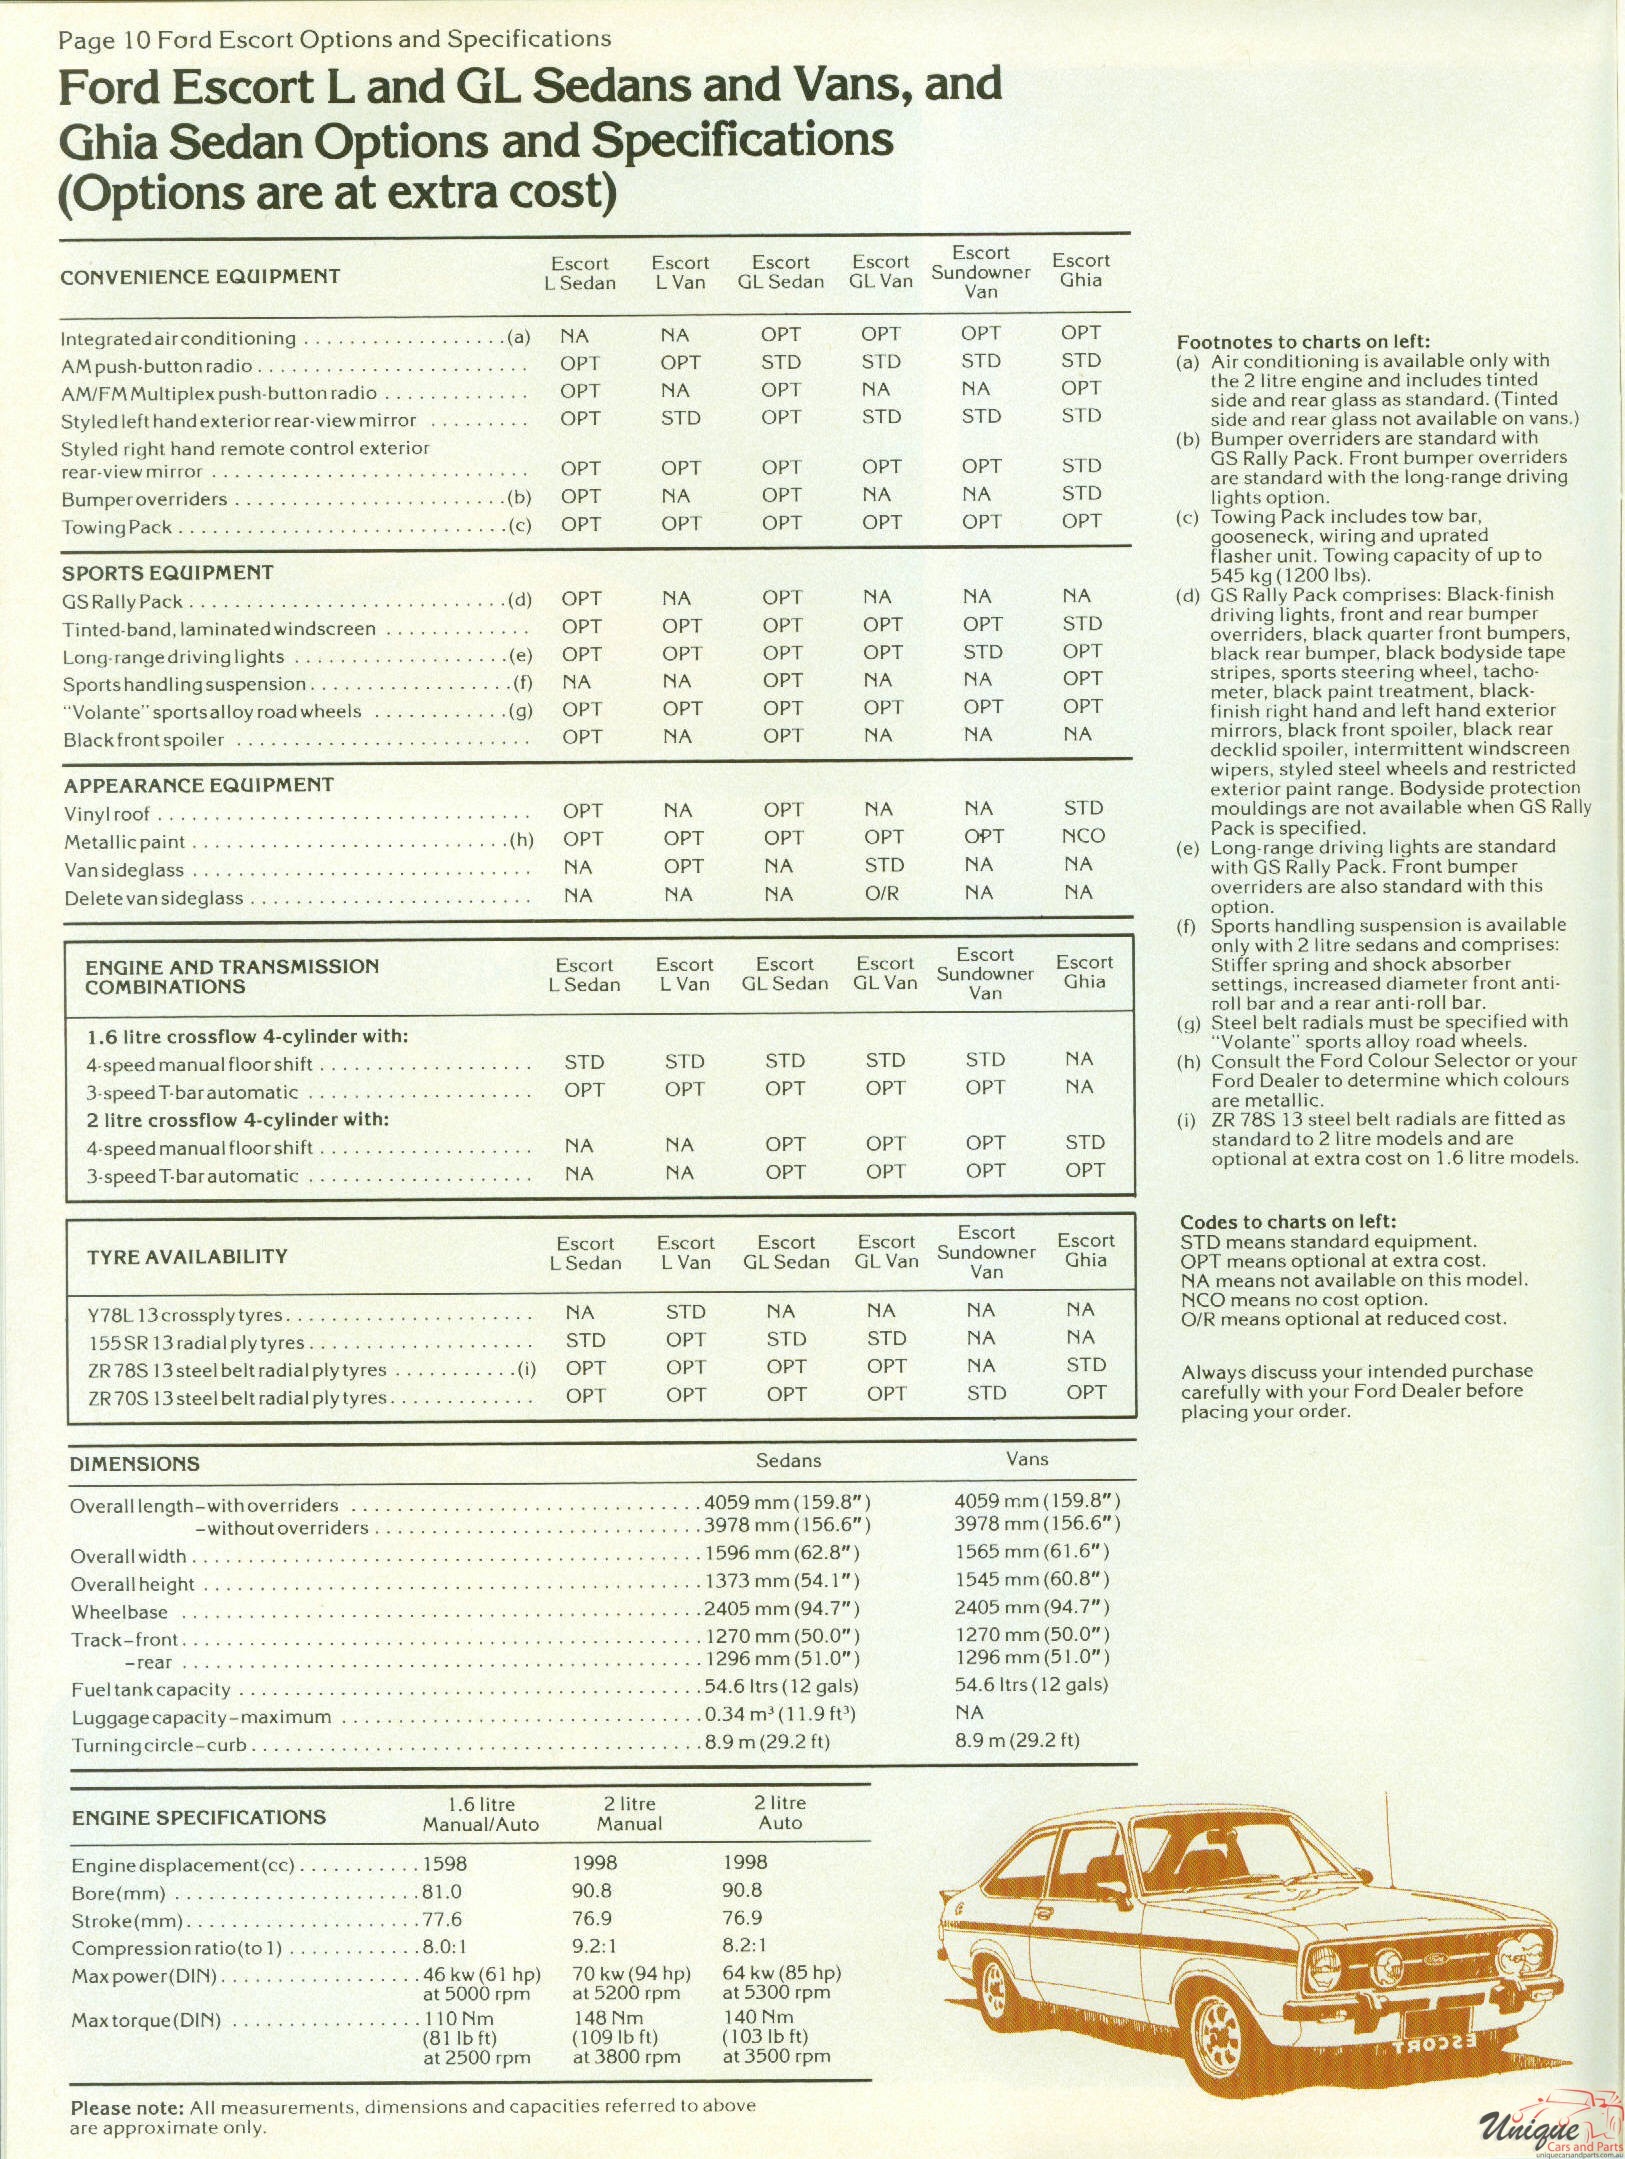 1978 Ford Australia Model Range Brochure Page 10